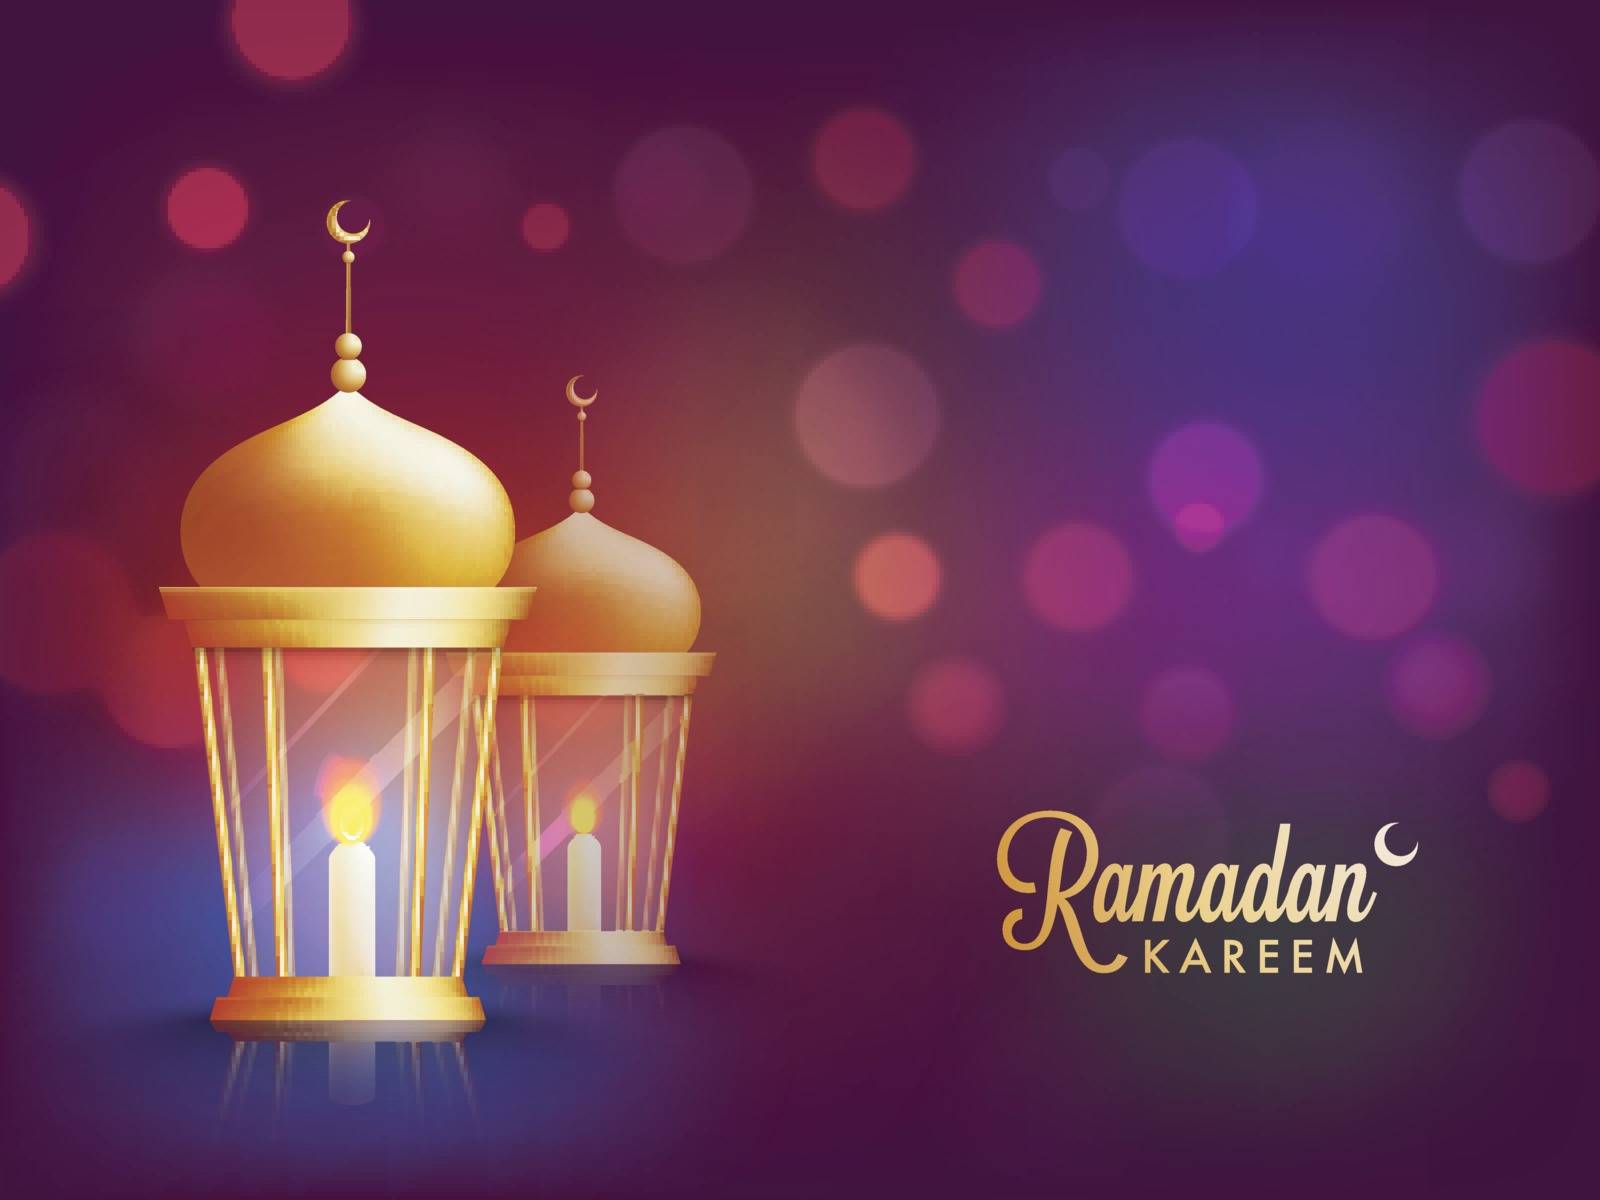 Illuminated Lamps for Ramadan Kareem celebration. by aispl